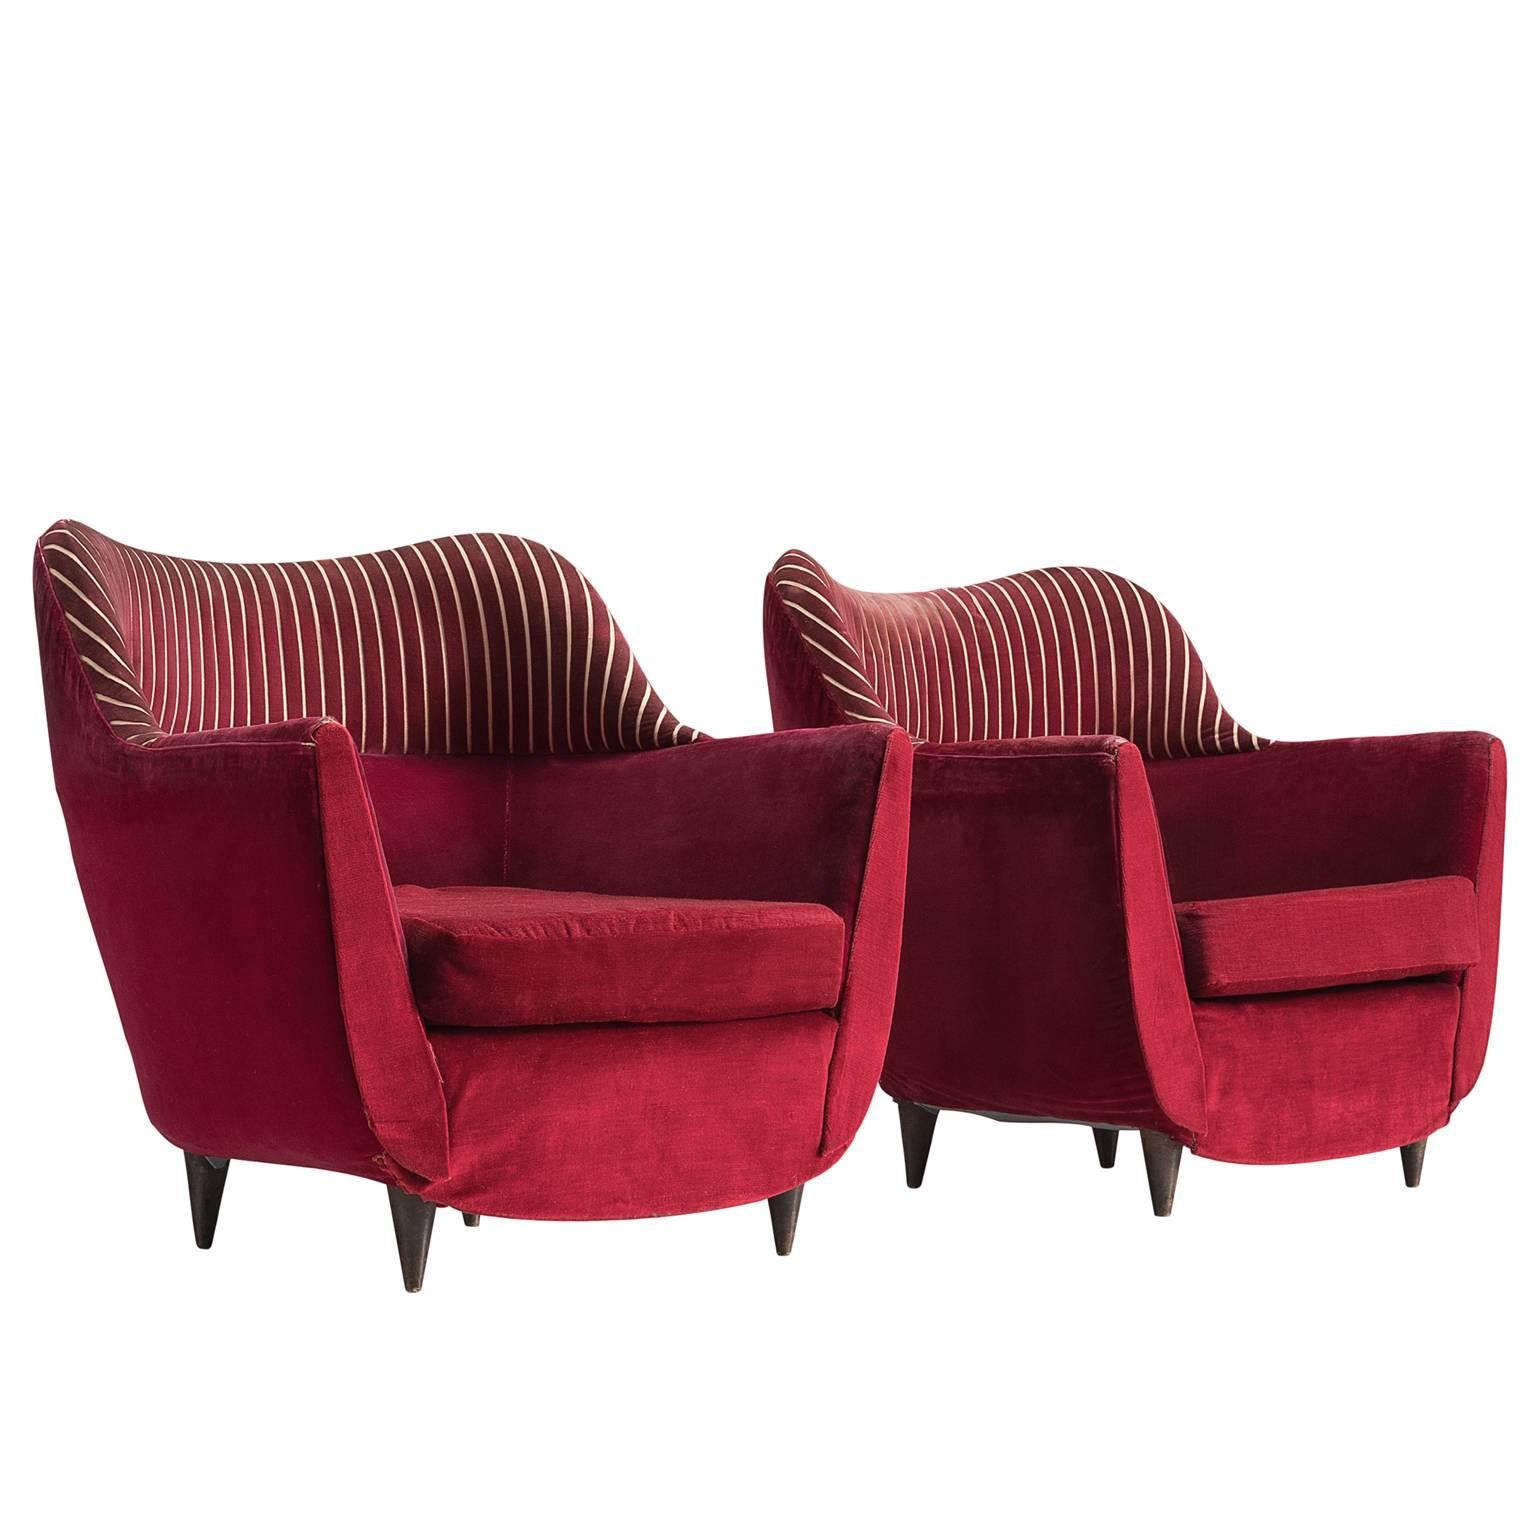 Italian Club Chairs in Deep Red Fabric, 1950s